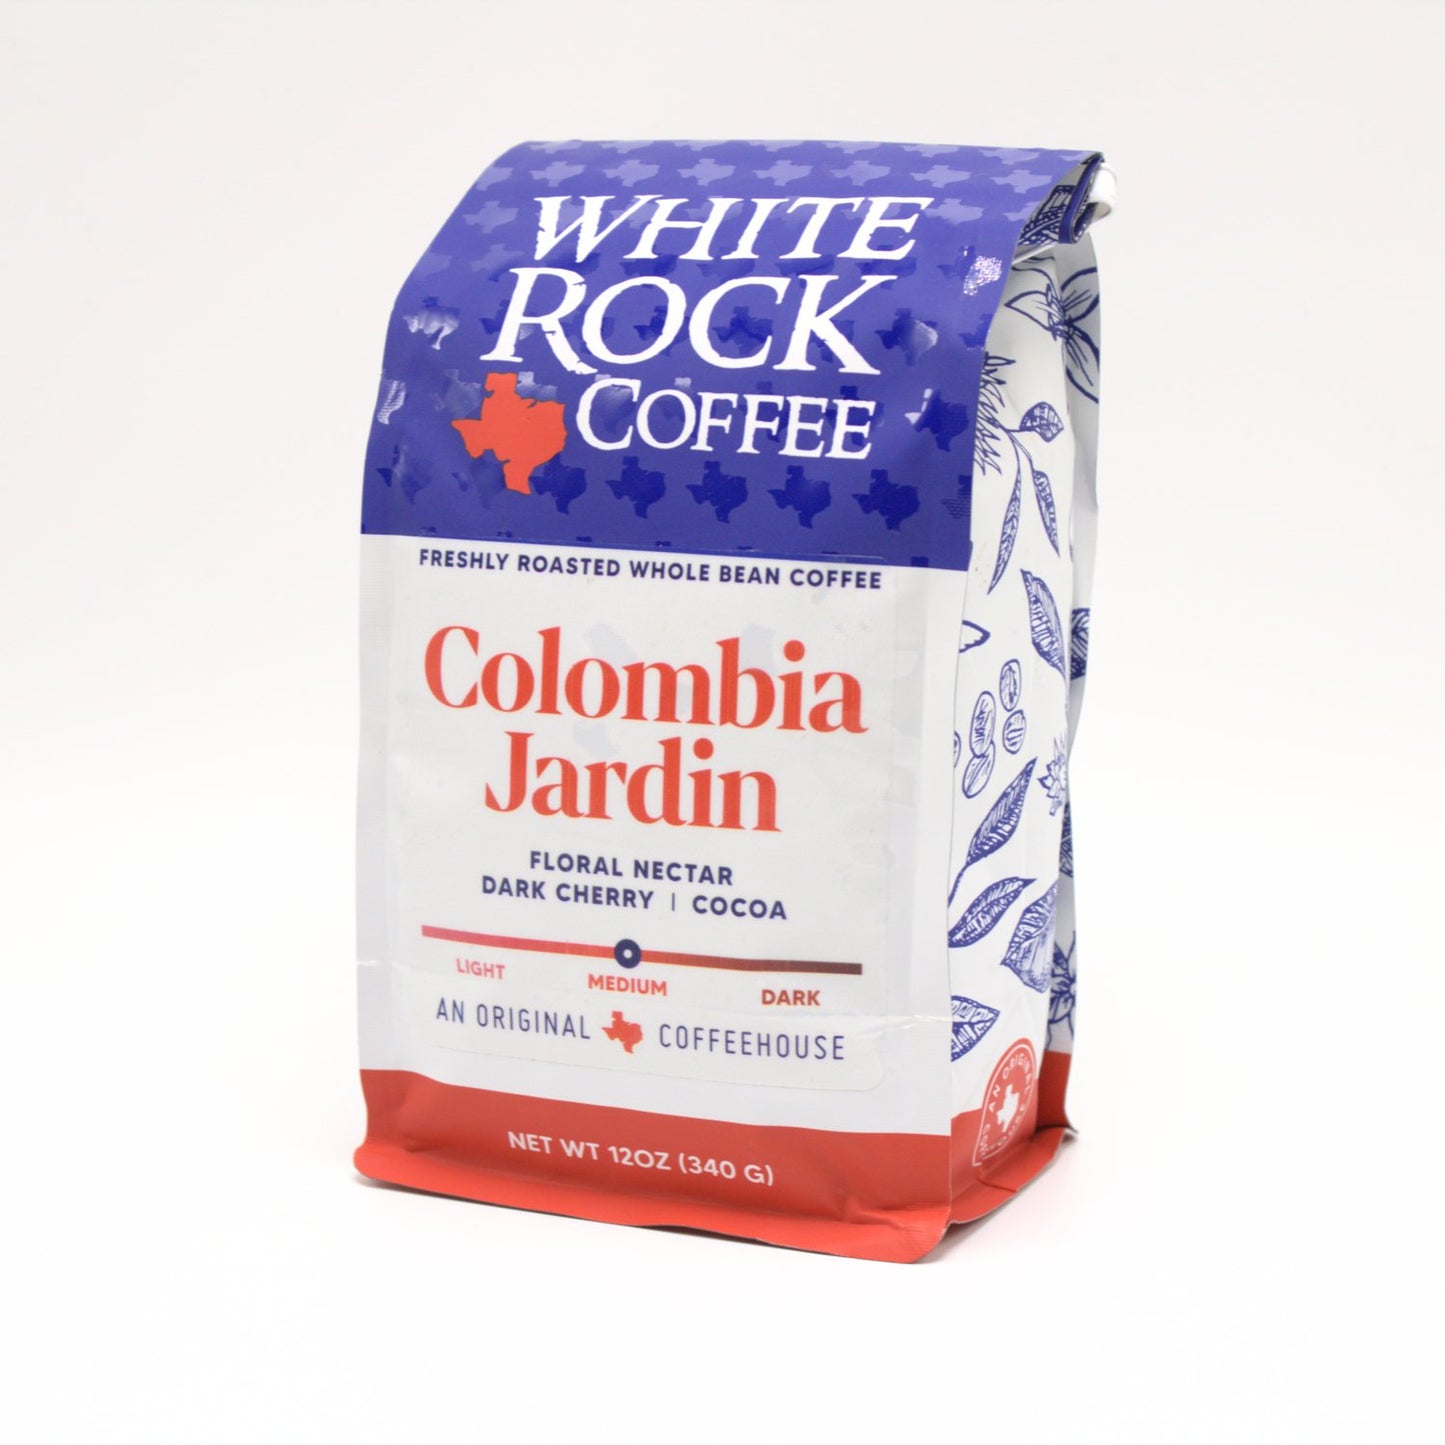 Colombia Jardín - White Rock Coffee